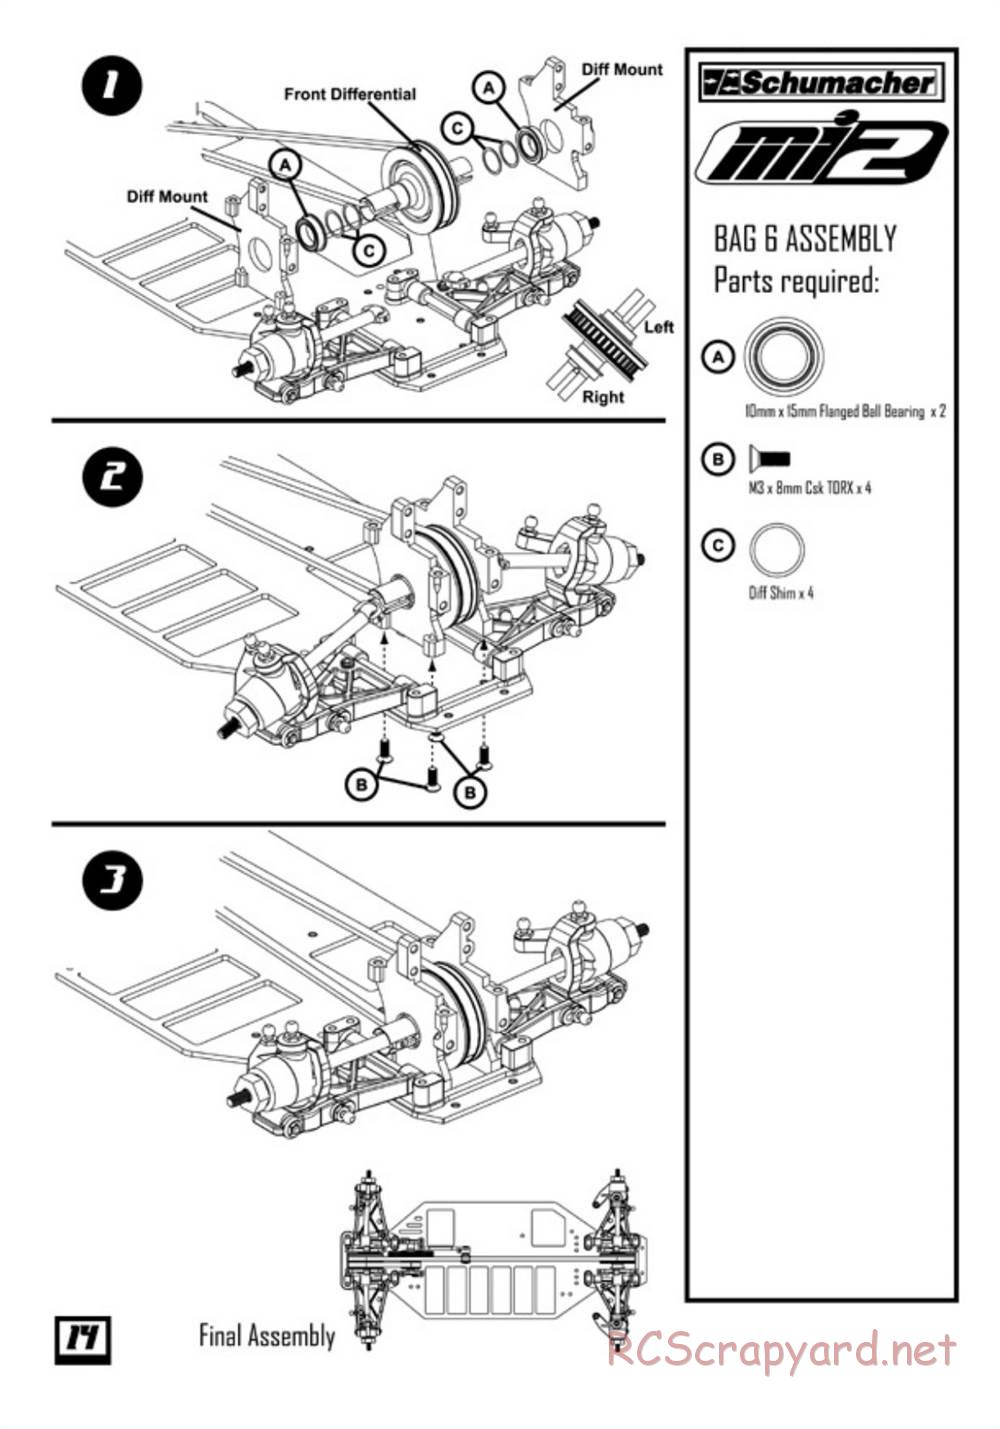 Schumacher - Mi2 - Manual - Page 16